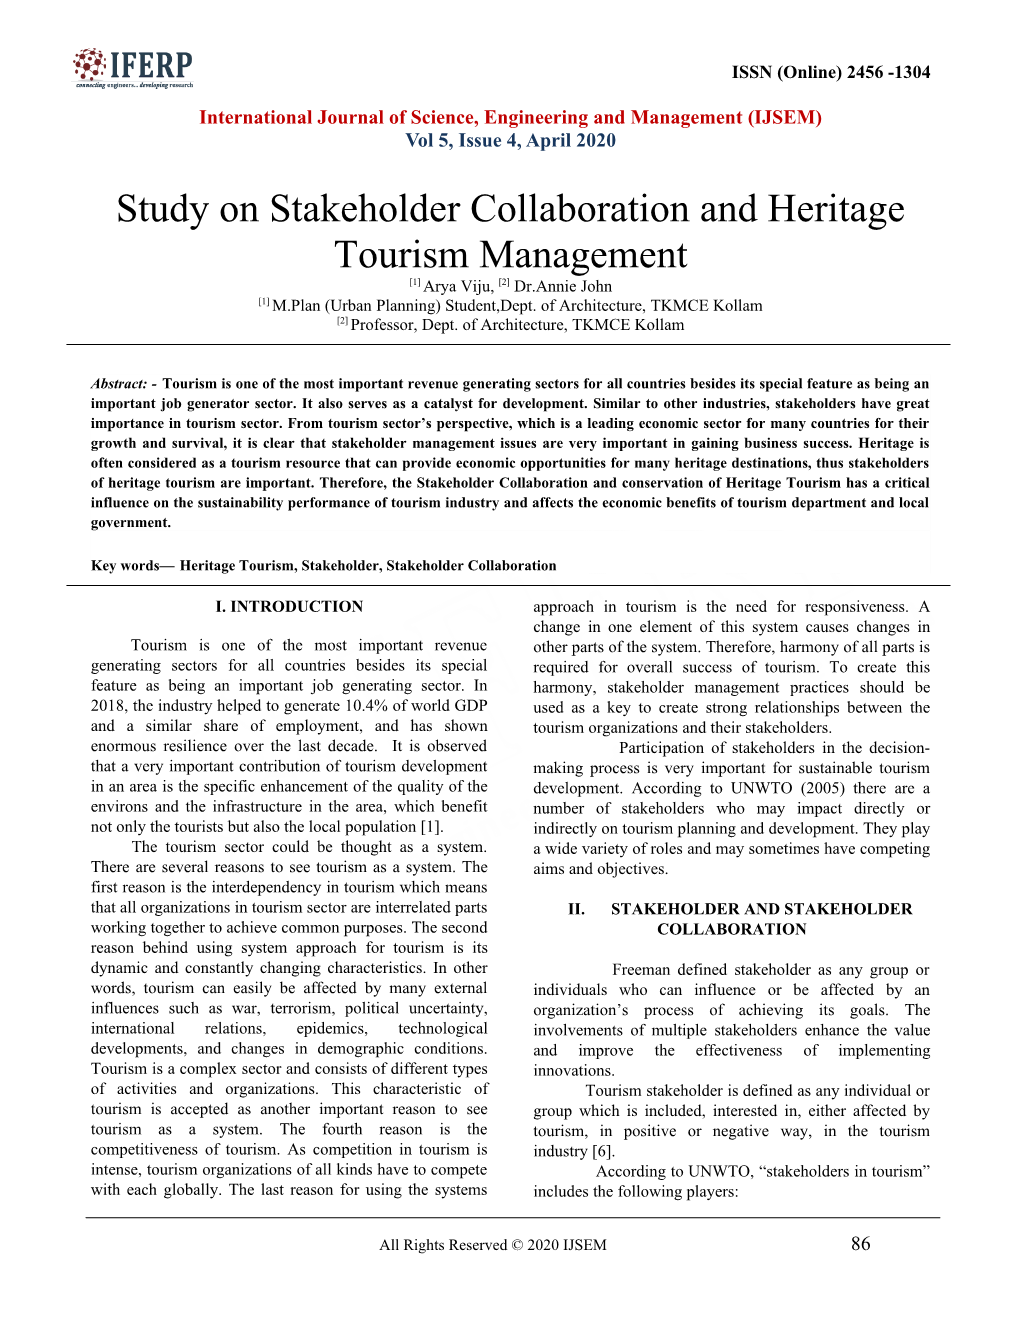 Study on Stakeholder Collaboration and Heritage Tourism Management [1] Arya Viju, [2] Dr.Annie John [1] M.Plan (Urban Planning) Student,Dept